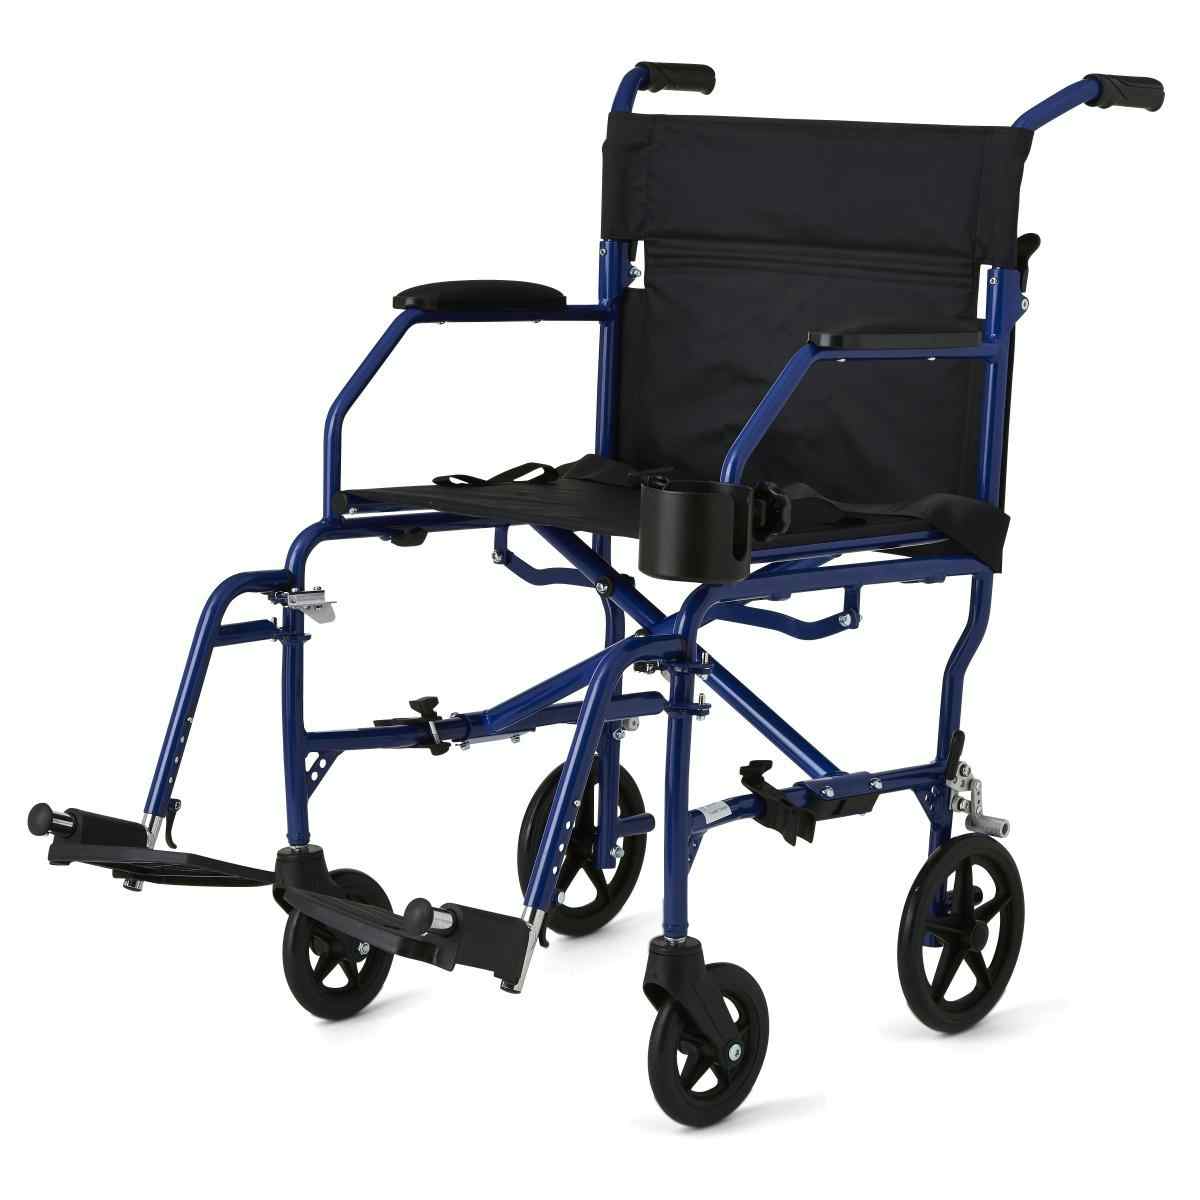 Medline Ultralight Transport Chair, Restaurant-Style Armrests, Swing-Away Footrests, Cup Holder, 6", MDS808200F3B, Blue - 1 Each